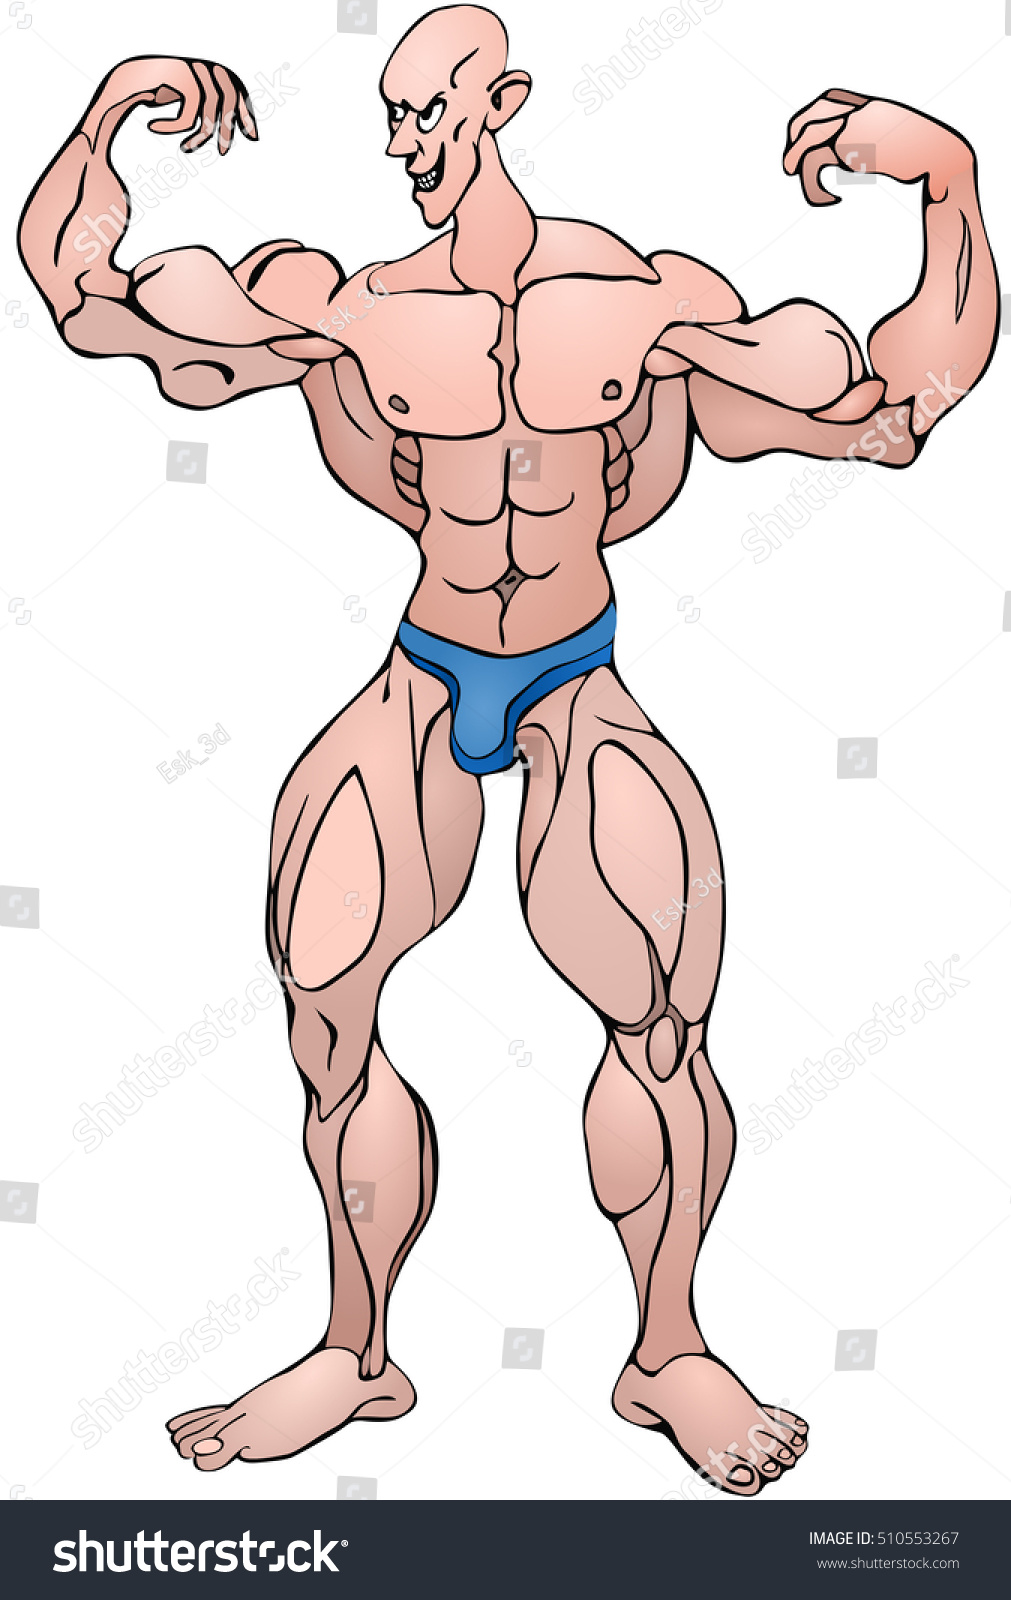 Bodybuilder Double Biceps Pose Vector Picture 스톡 벡터로열티 프리 510553267 Shutterstock 6249